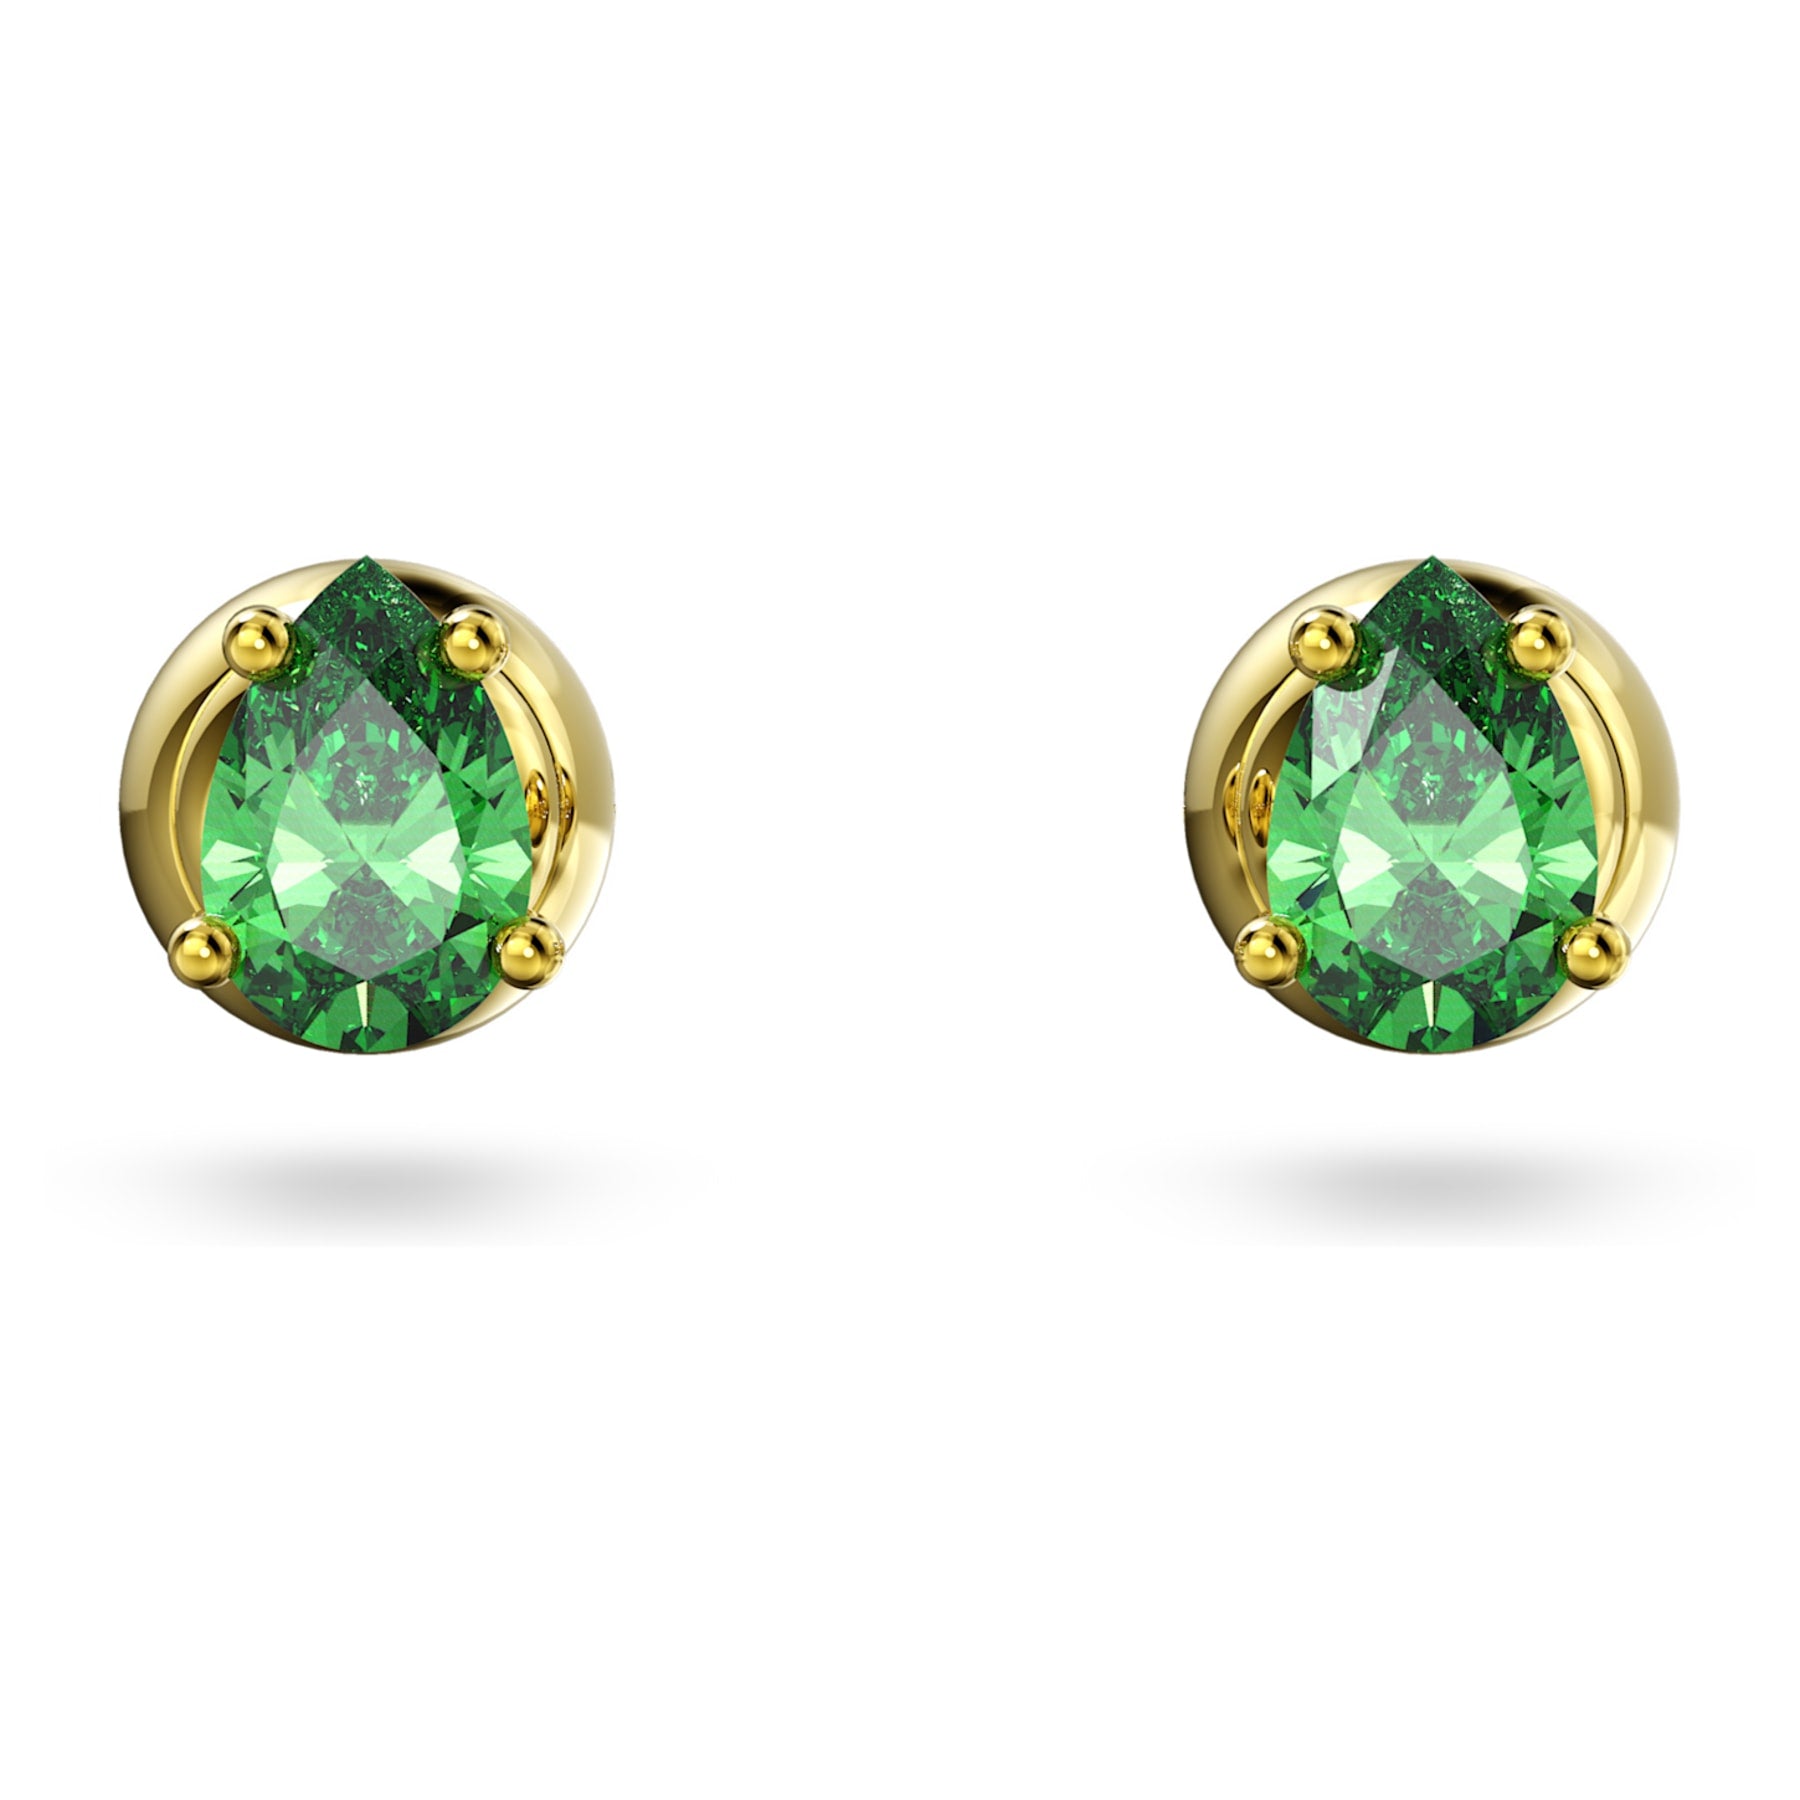 Stilla - Golden Green - Earrings - Swarovski